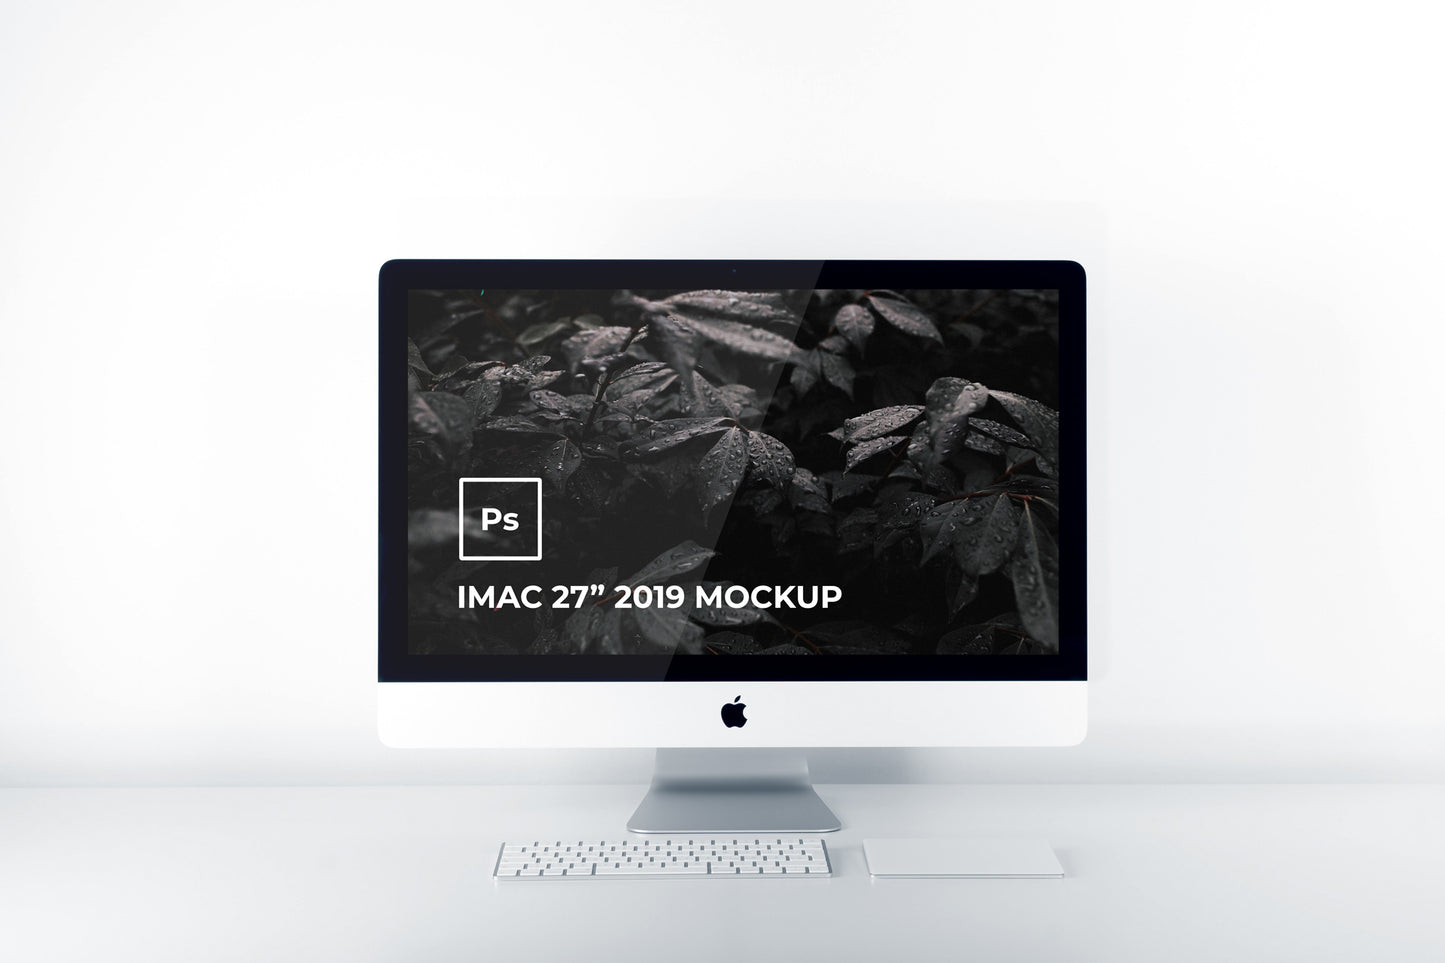 Free iMac 27" 2019 Mockup PSD